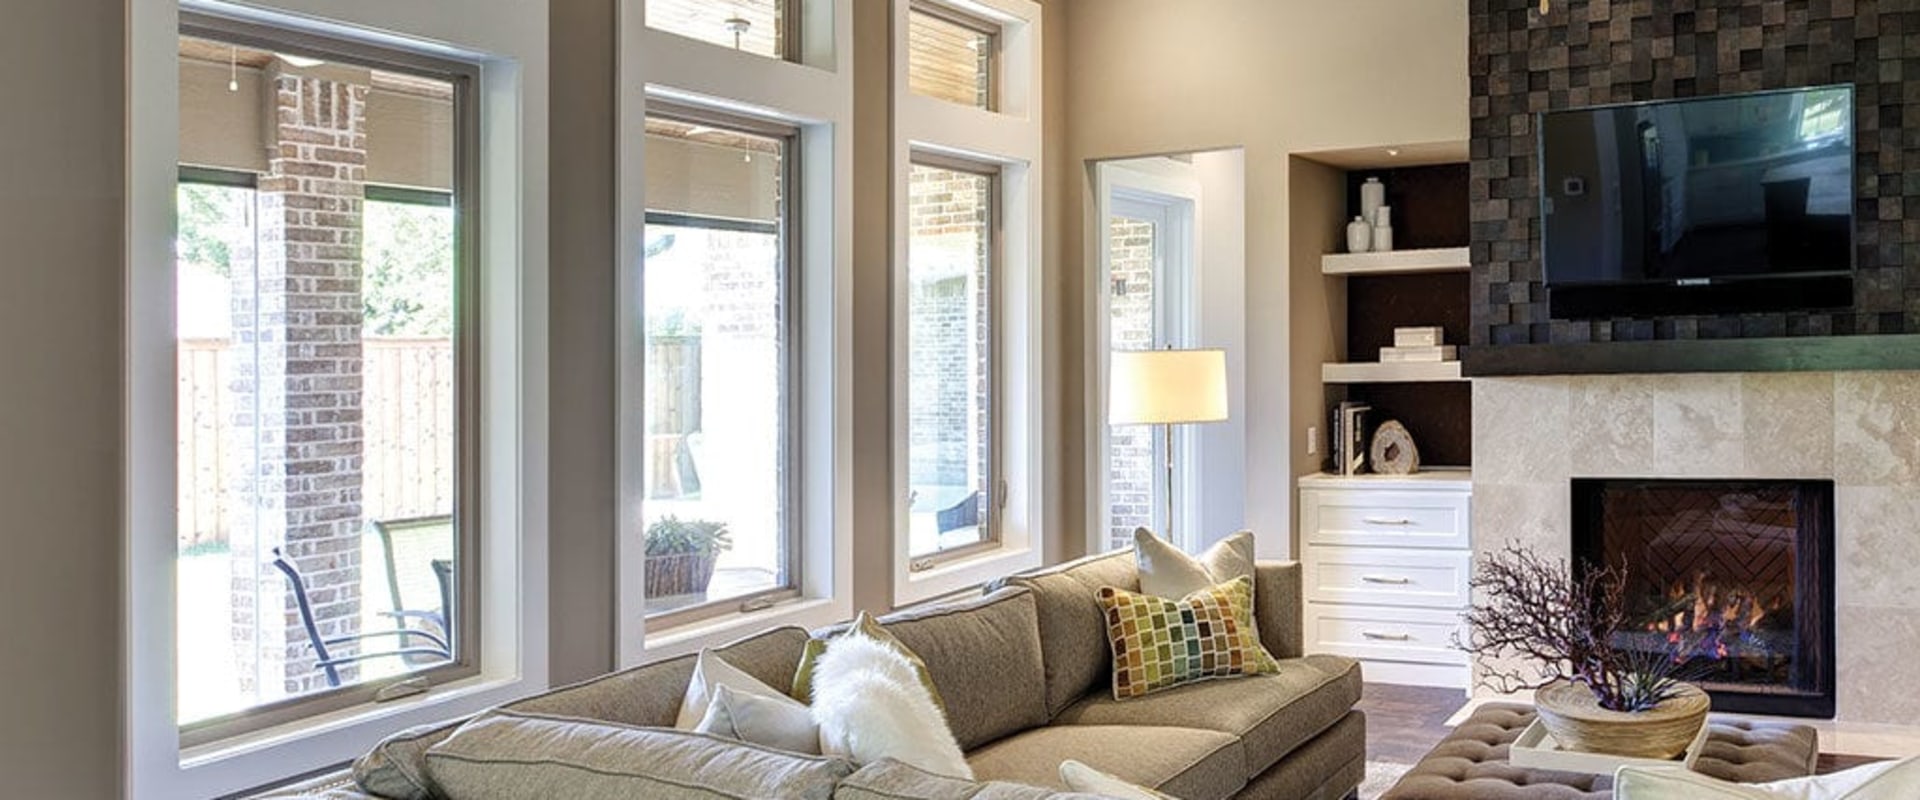 Orange County Windows and Doors: Enhancing Home's Aesthetics and Efficiency